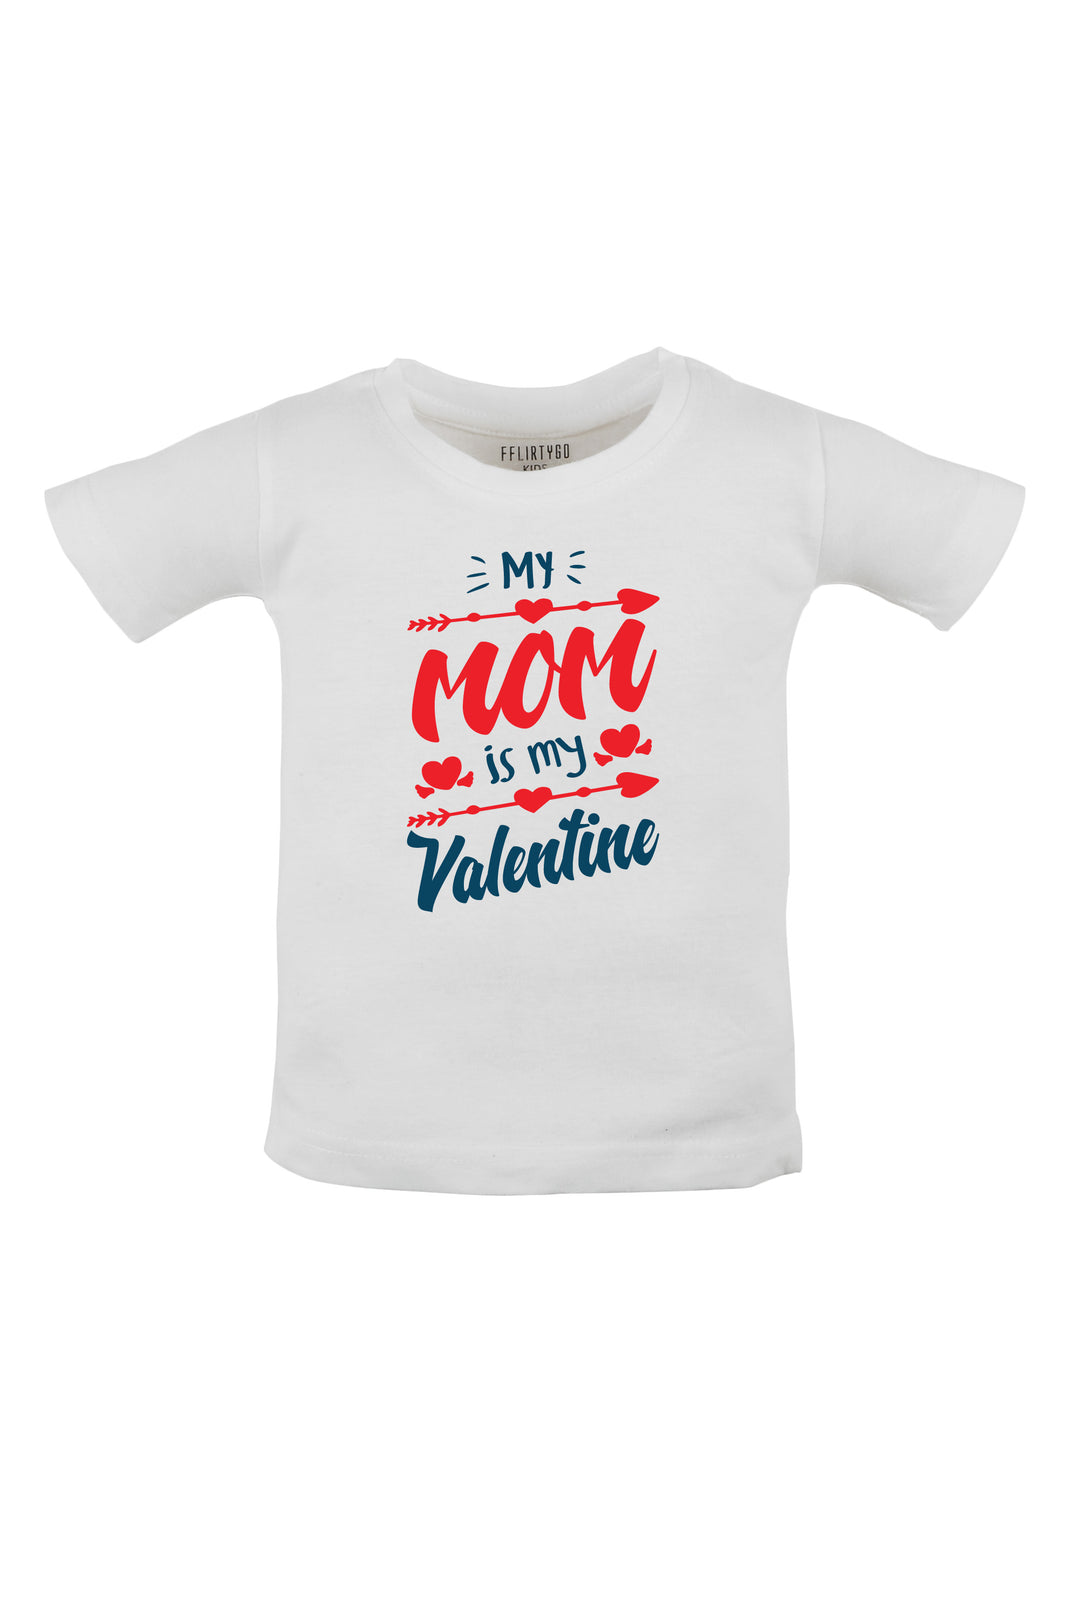 My Mom Is My Valentine Kids T Shirt